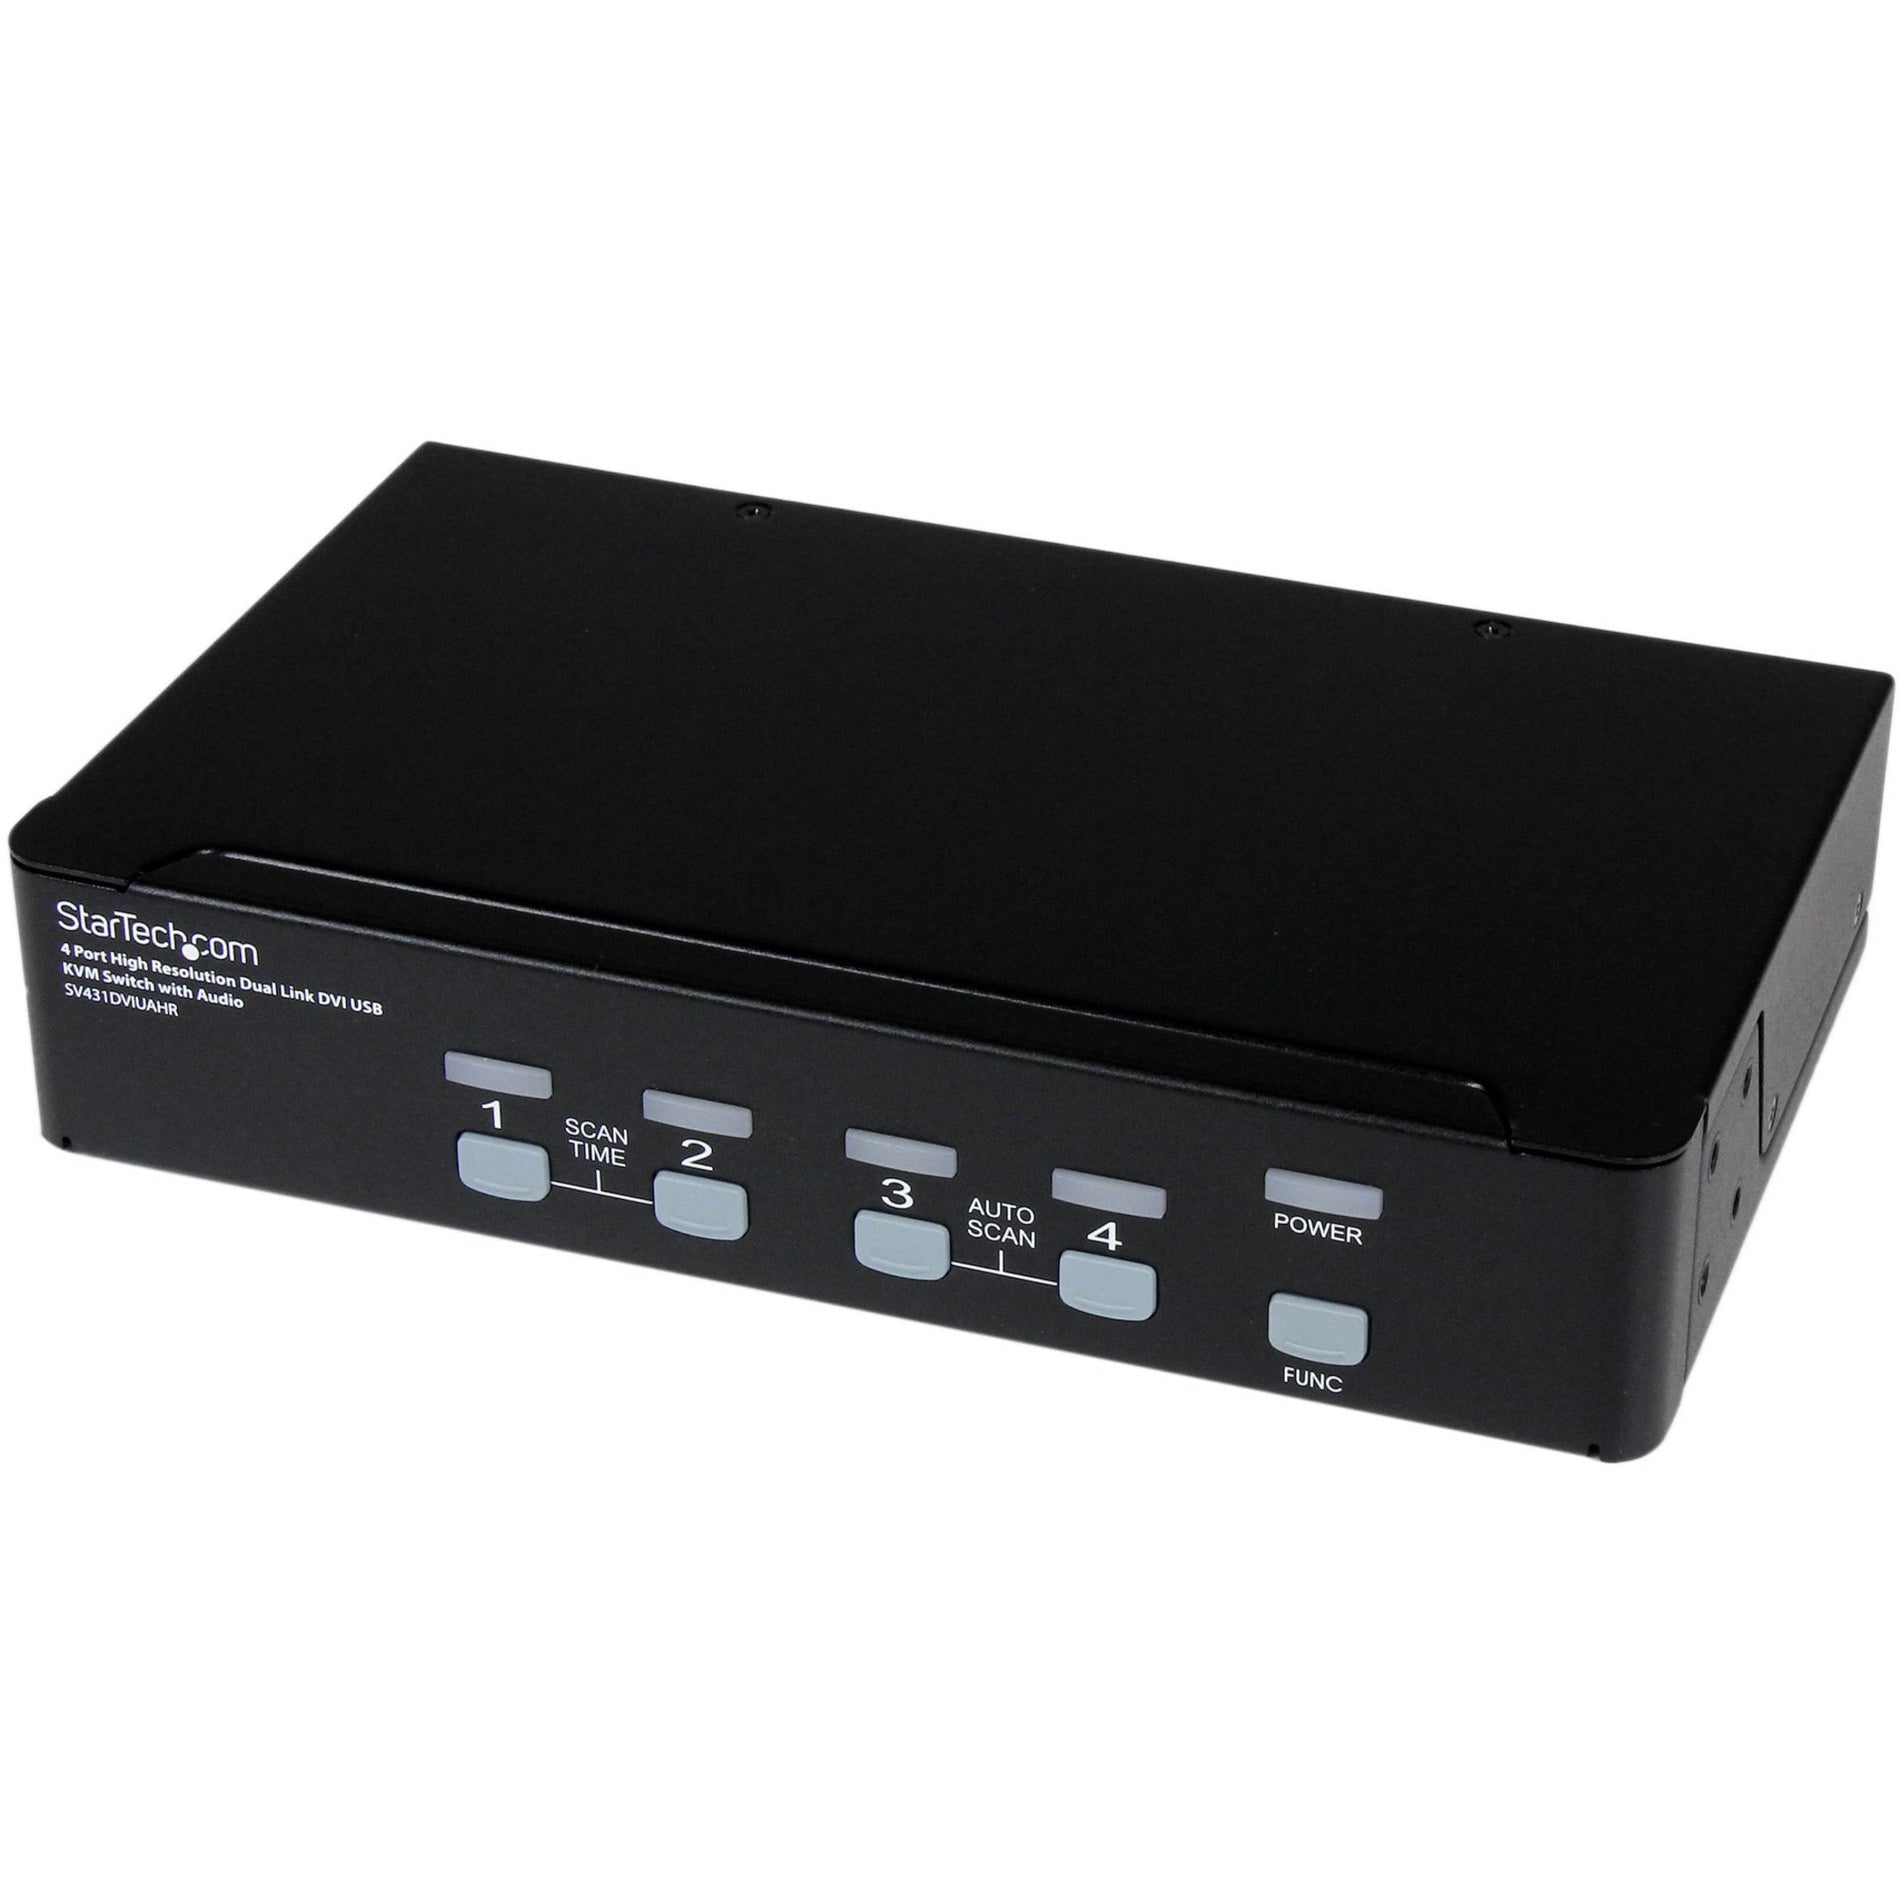 StarTech.com SV431DVIUAHR 4 Port USB DVI Dual Link KVM Switch with Audio, 2560x1600 Resolution, TAA Compliant